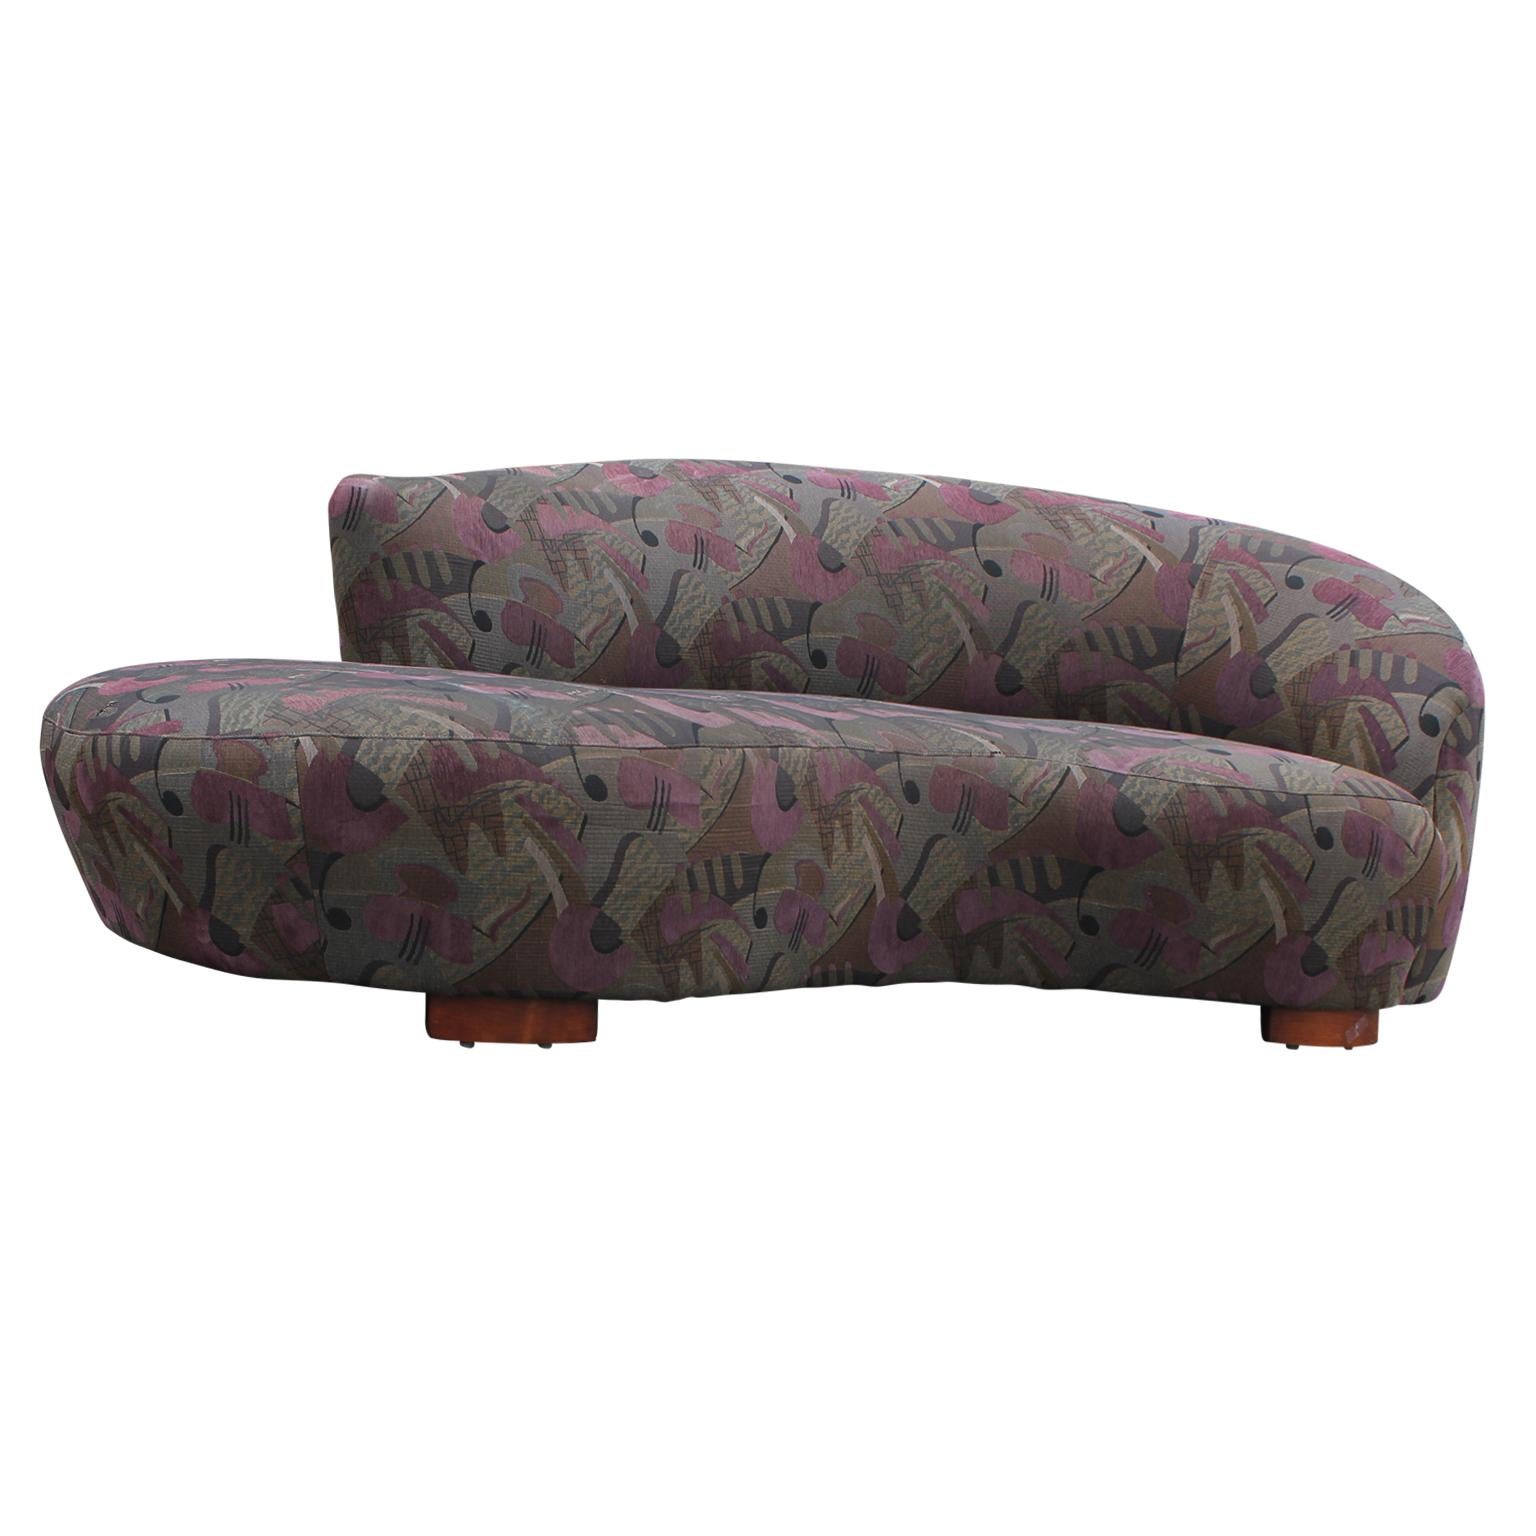 Stunning Vladimir Kagan for Weiman curved serpentine cloud sofa. In original fabric, needs reupholstery.